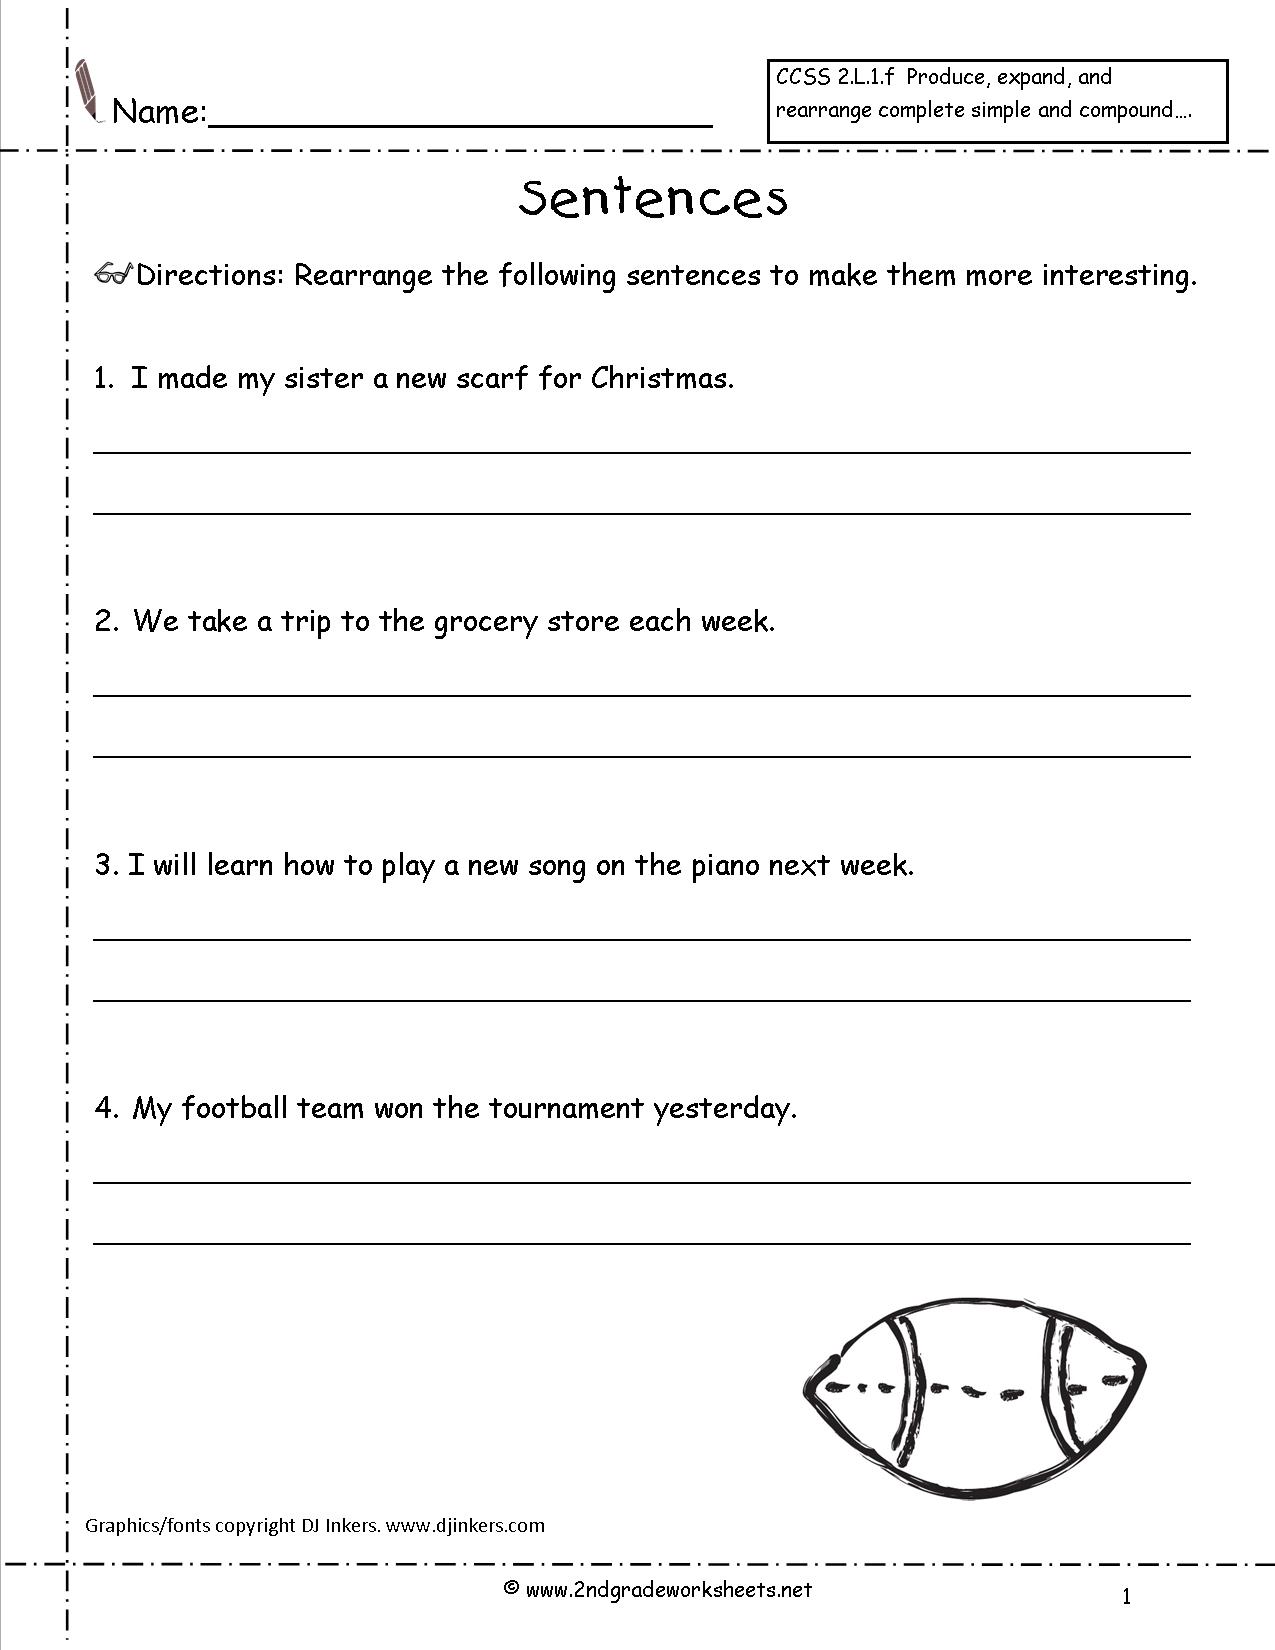 18 Best Images Of Combining Sentences Worksheets 3rd Grade 2nd Grade Sentences Worksheets